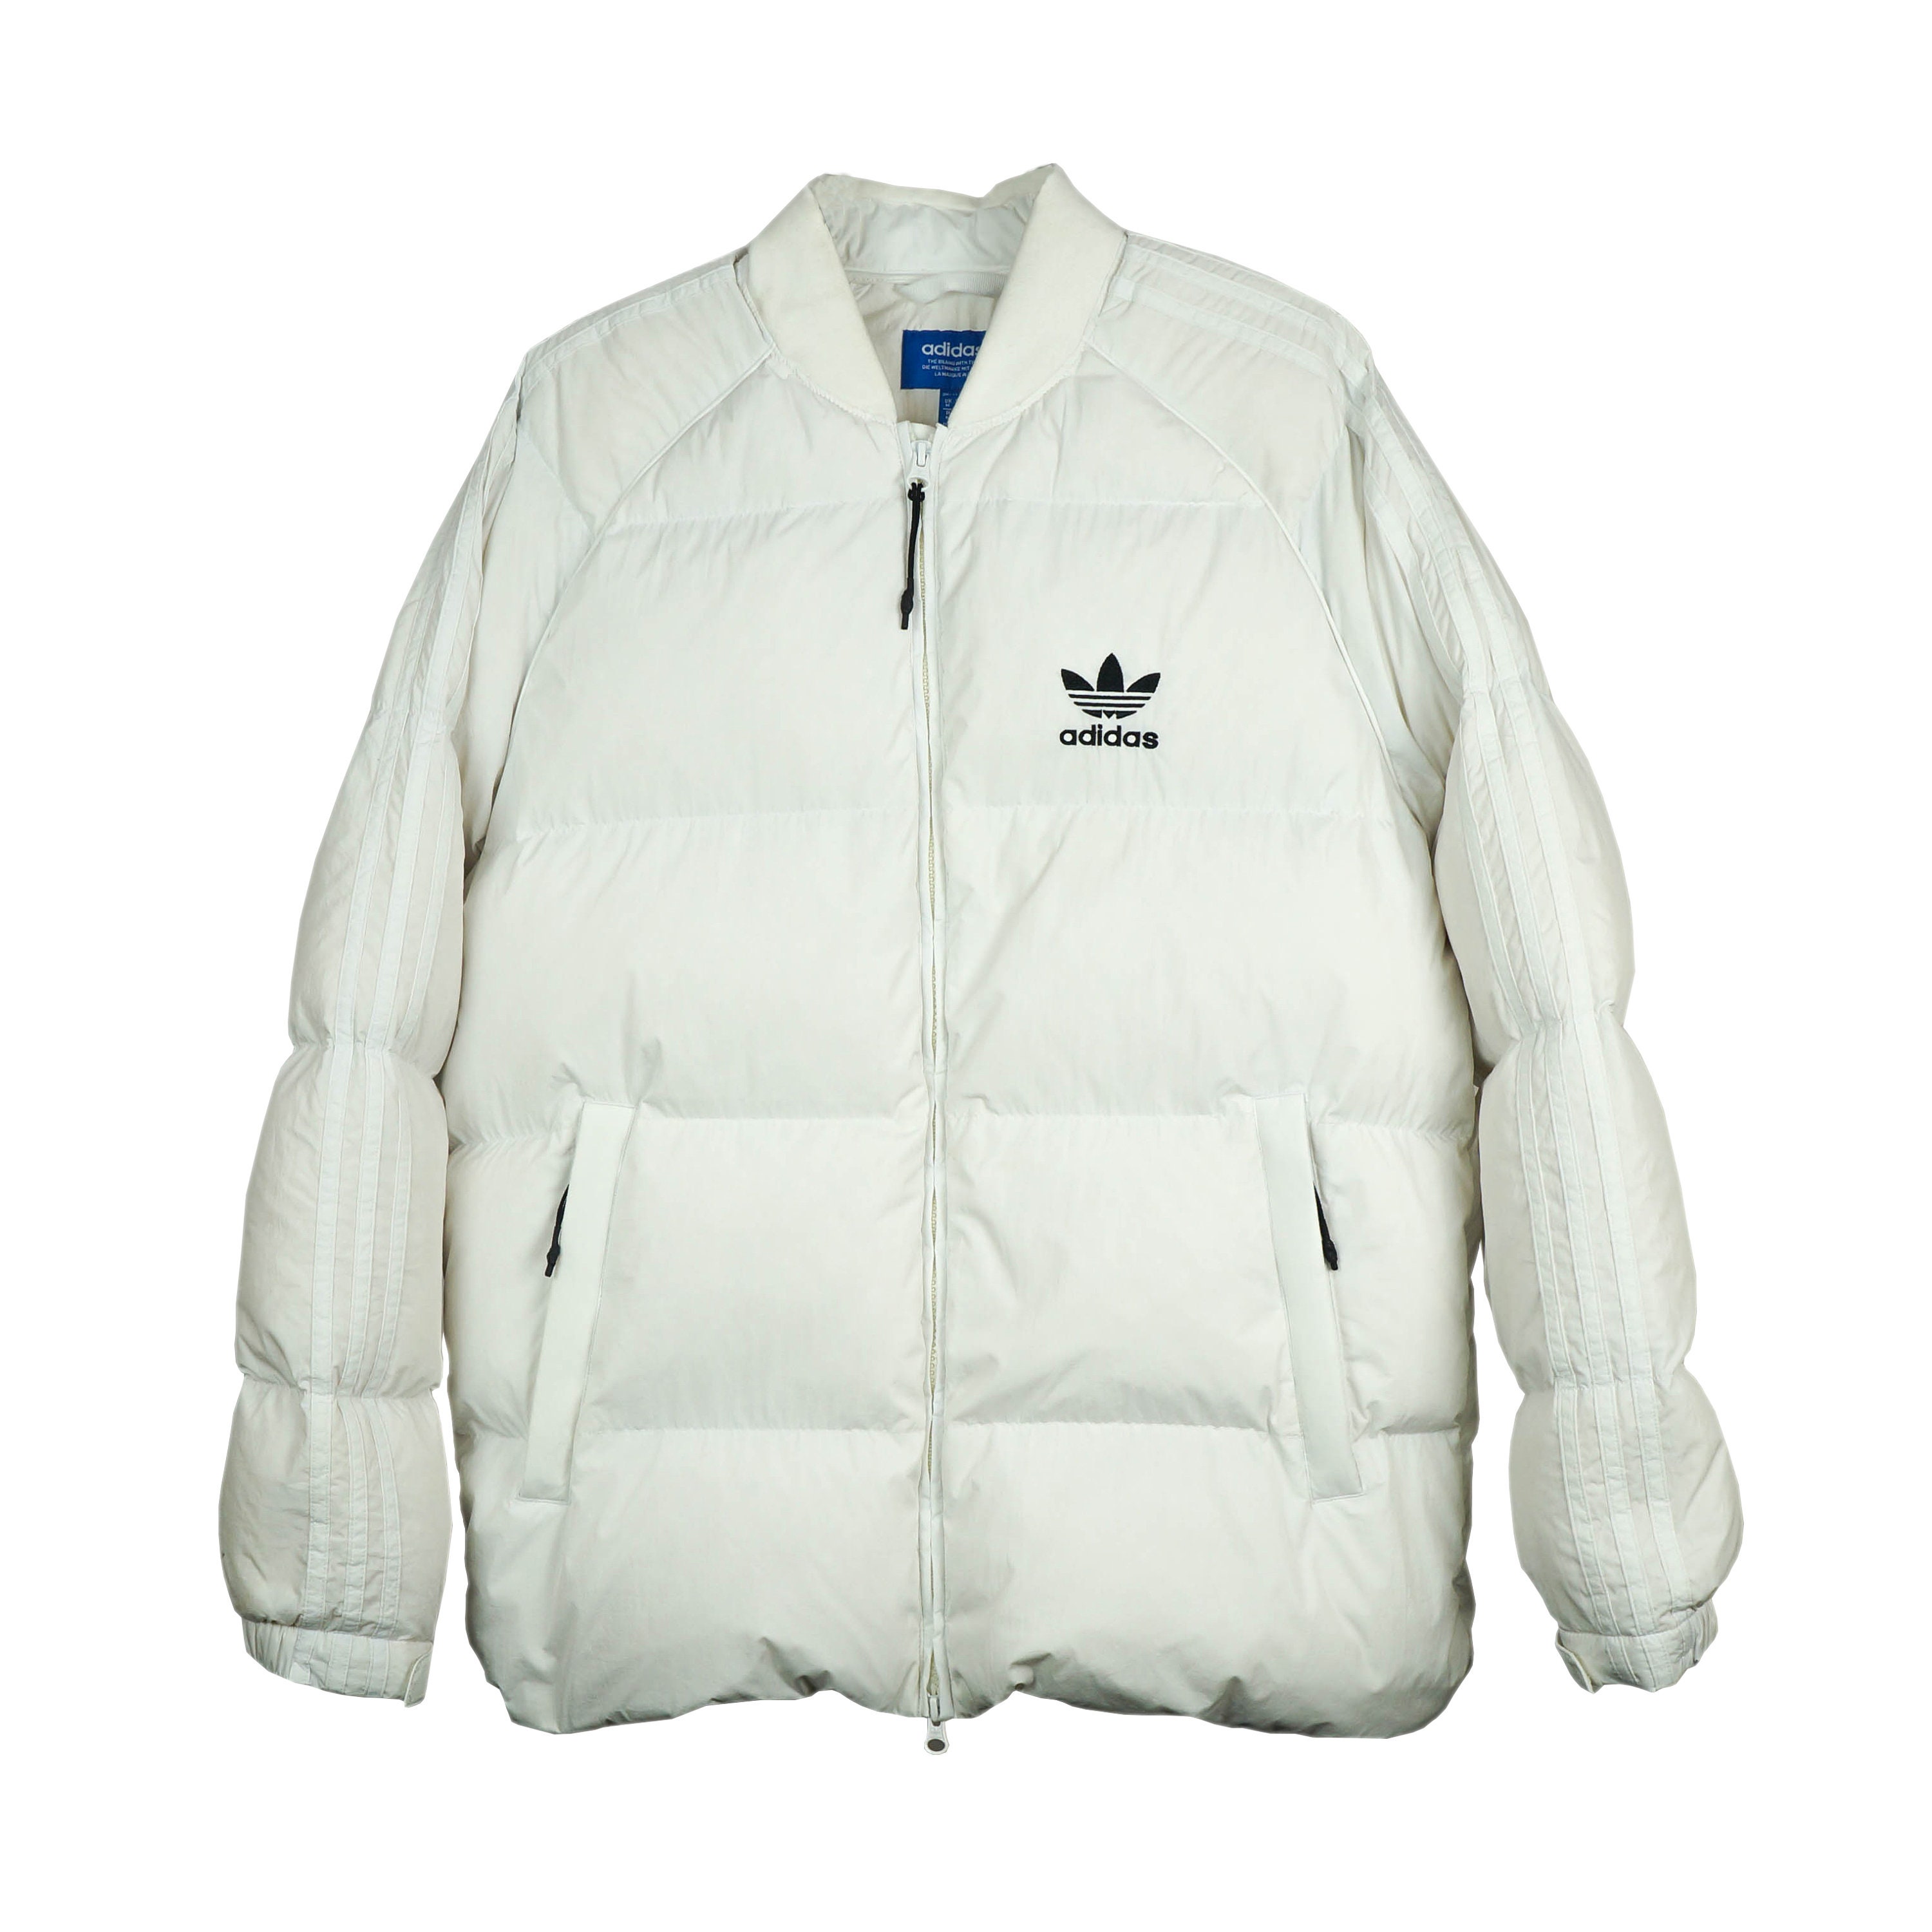 Adidas Originals Vintage Puffer Jacket White Etsy